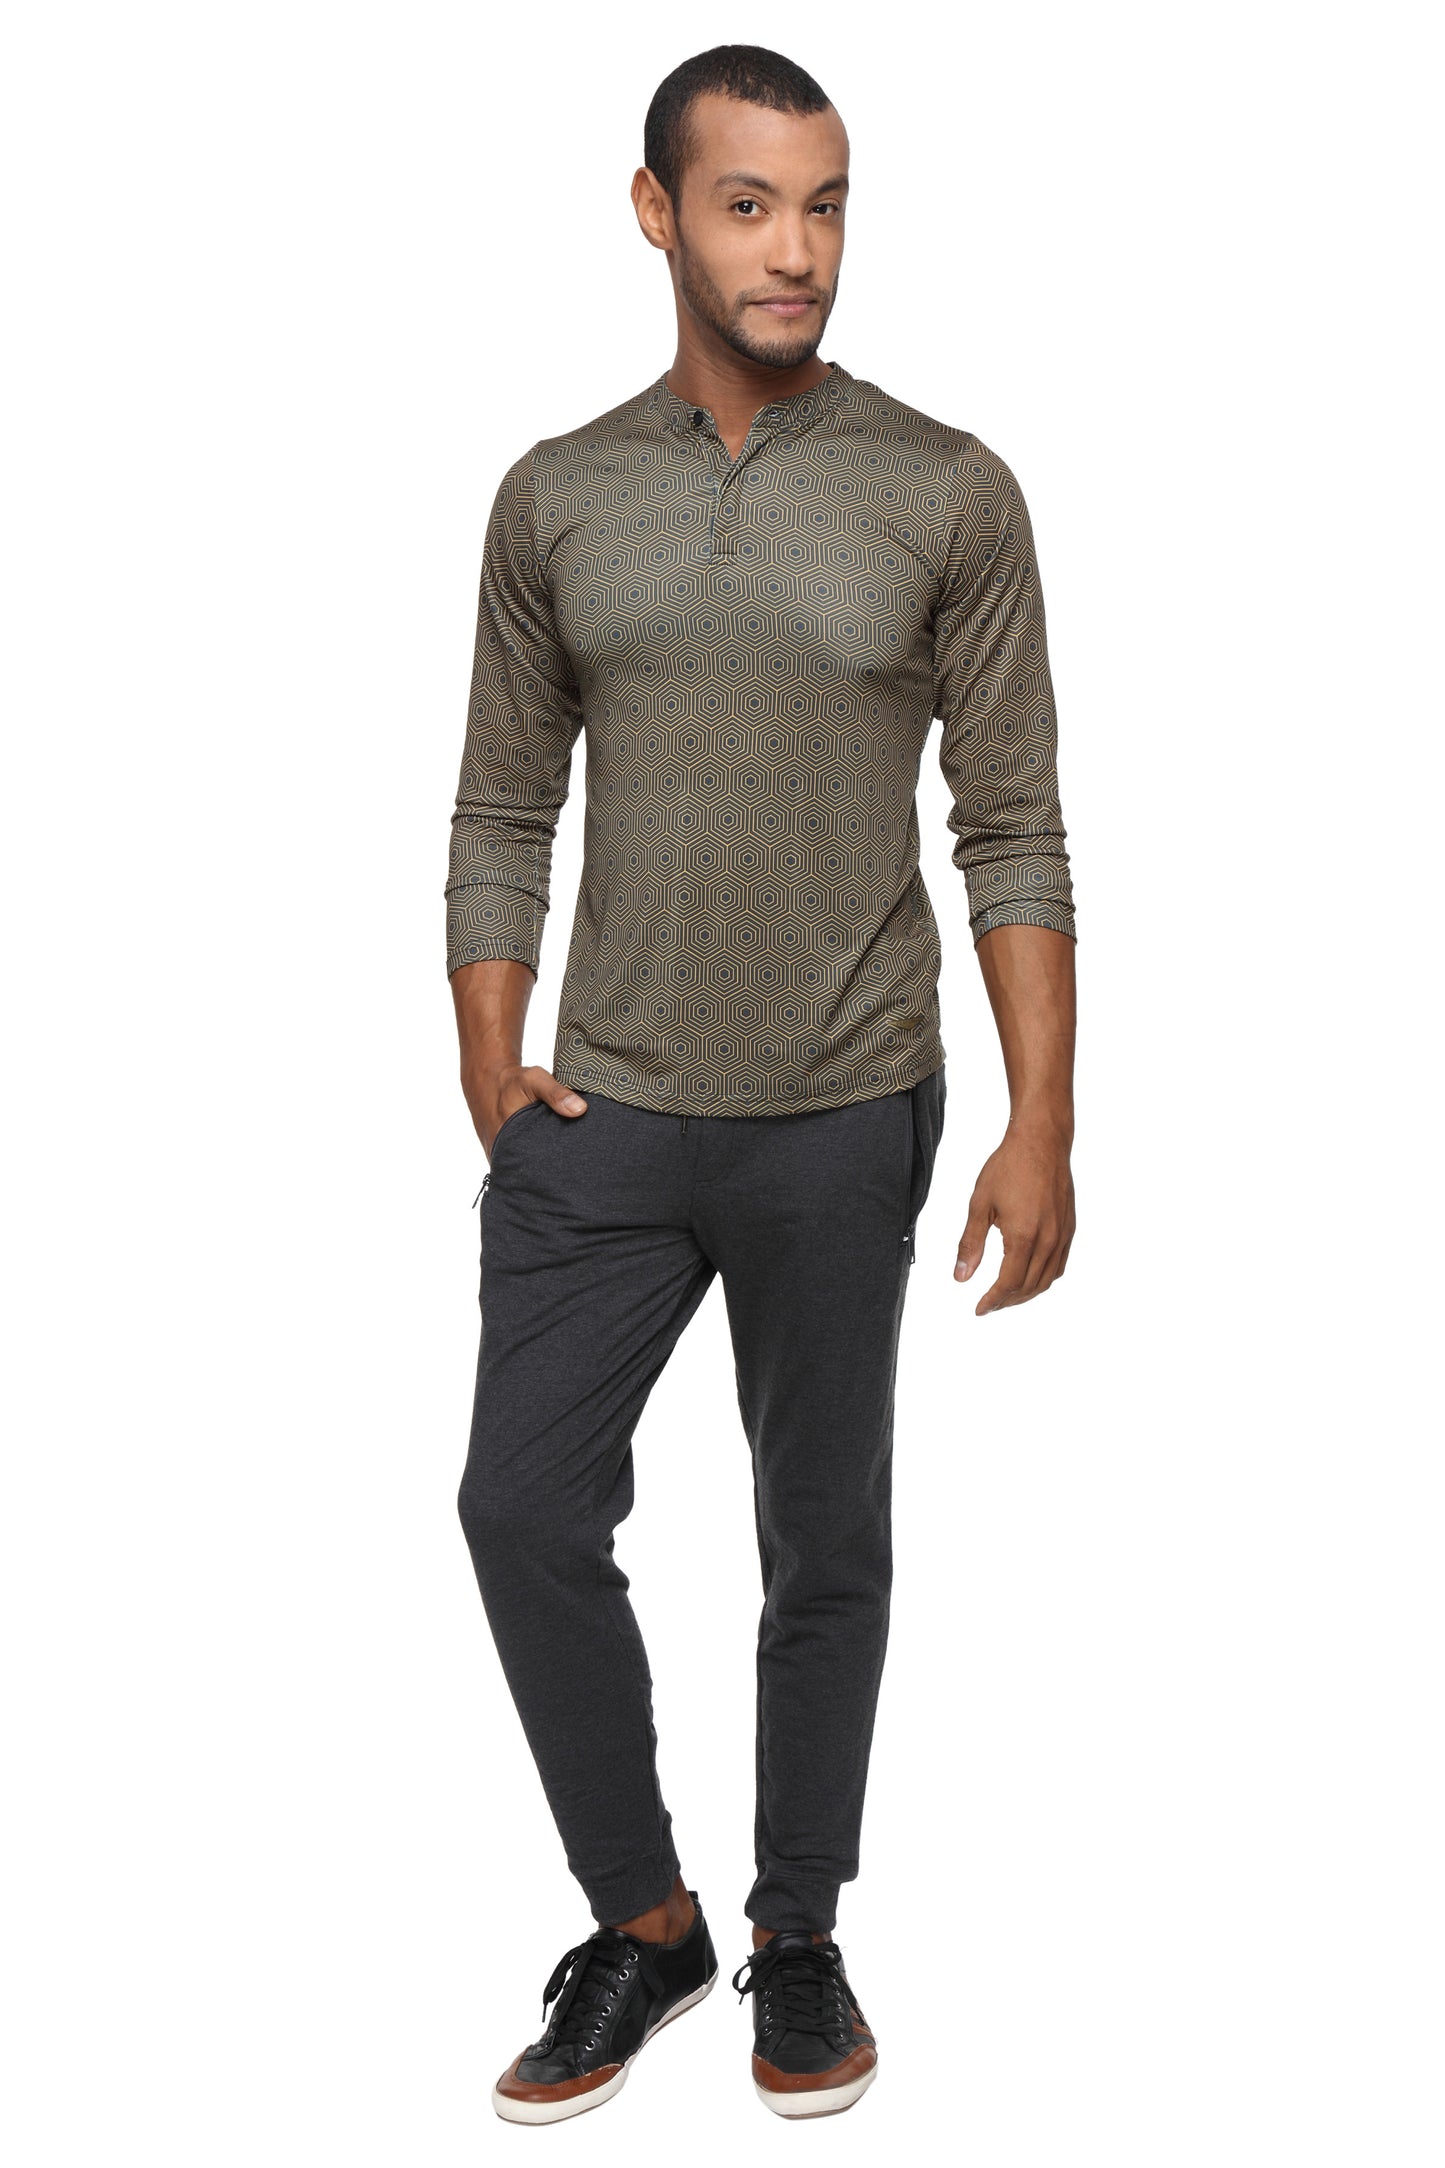 Slim fit cotton Joggers- Grey - Zebo Active Wear